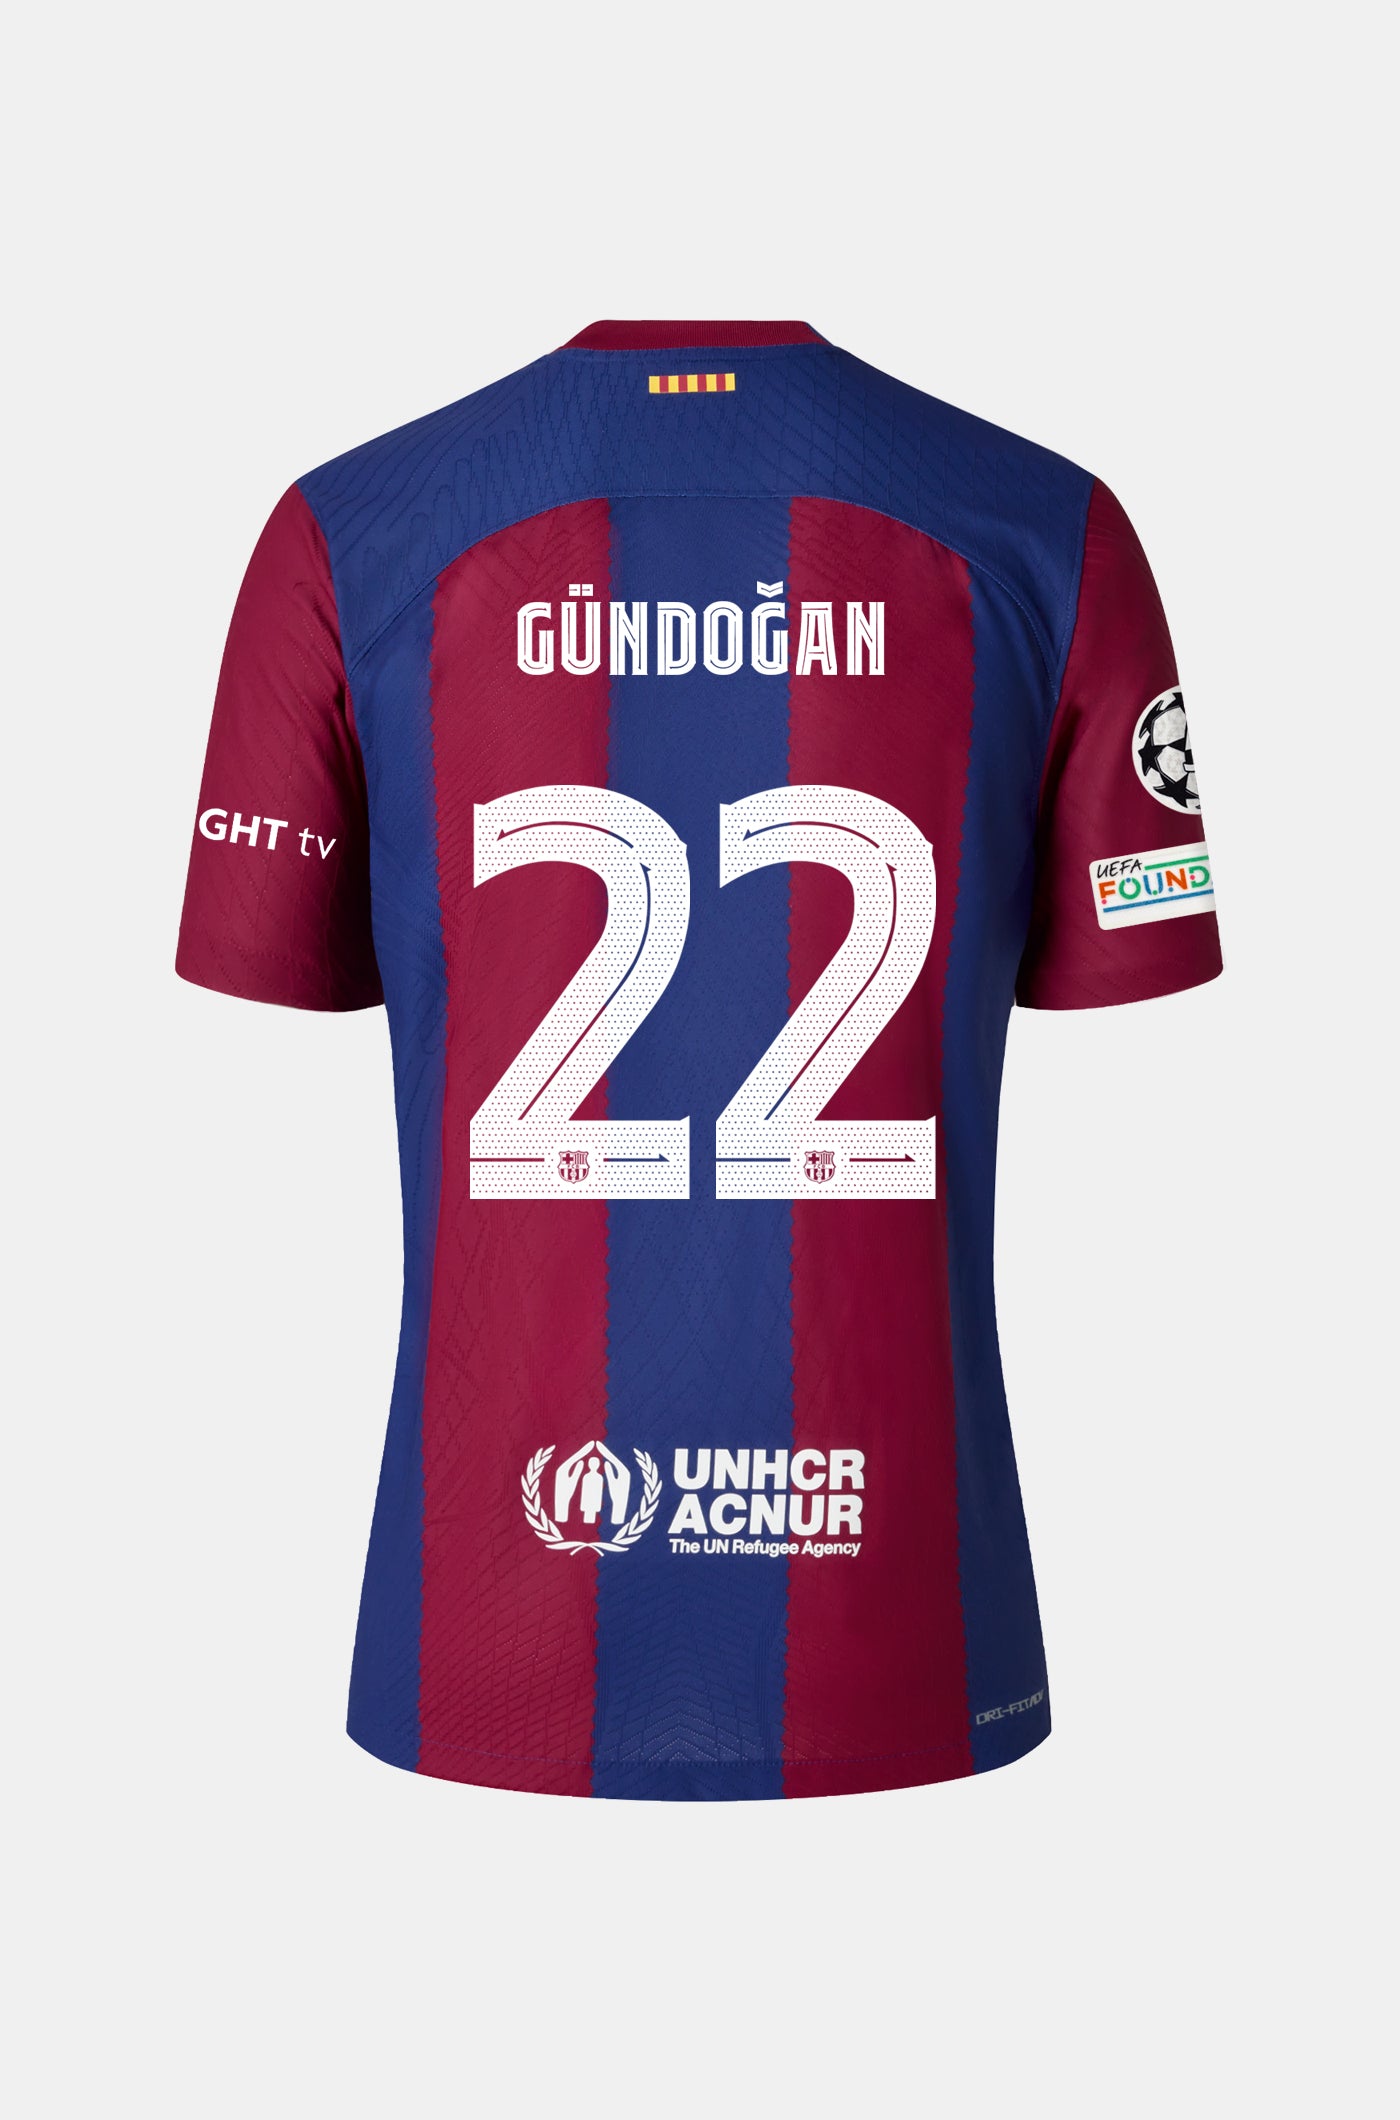 UCL FC Barcelona home shirt 23/24 Player’s Edition - GÜNDO?AN